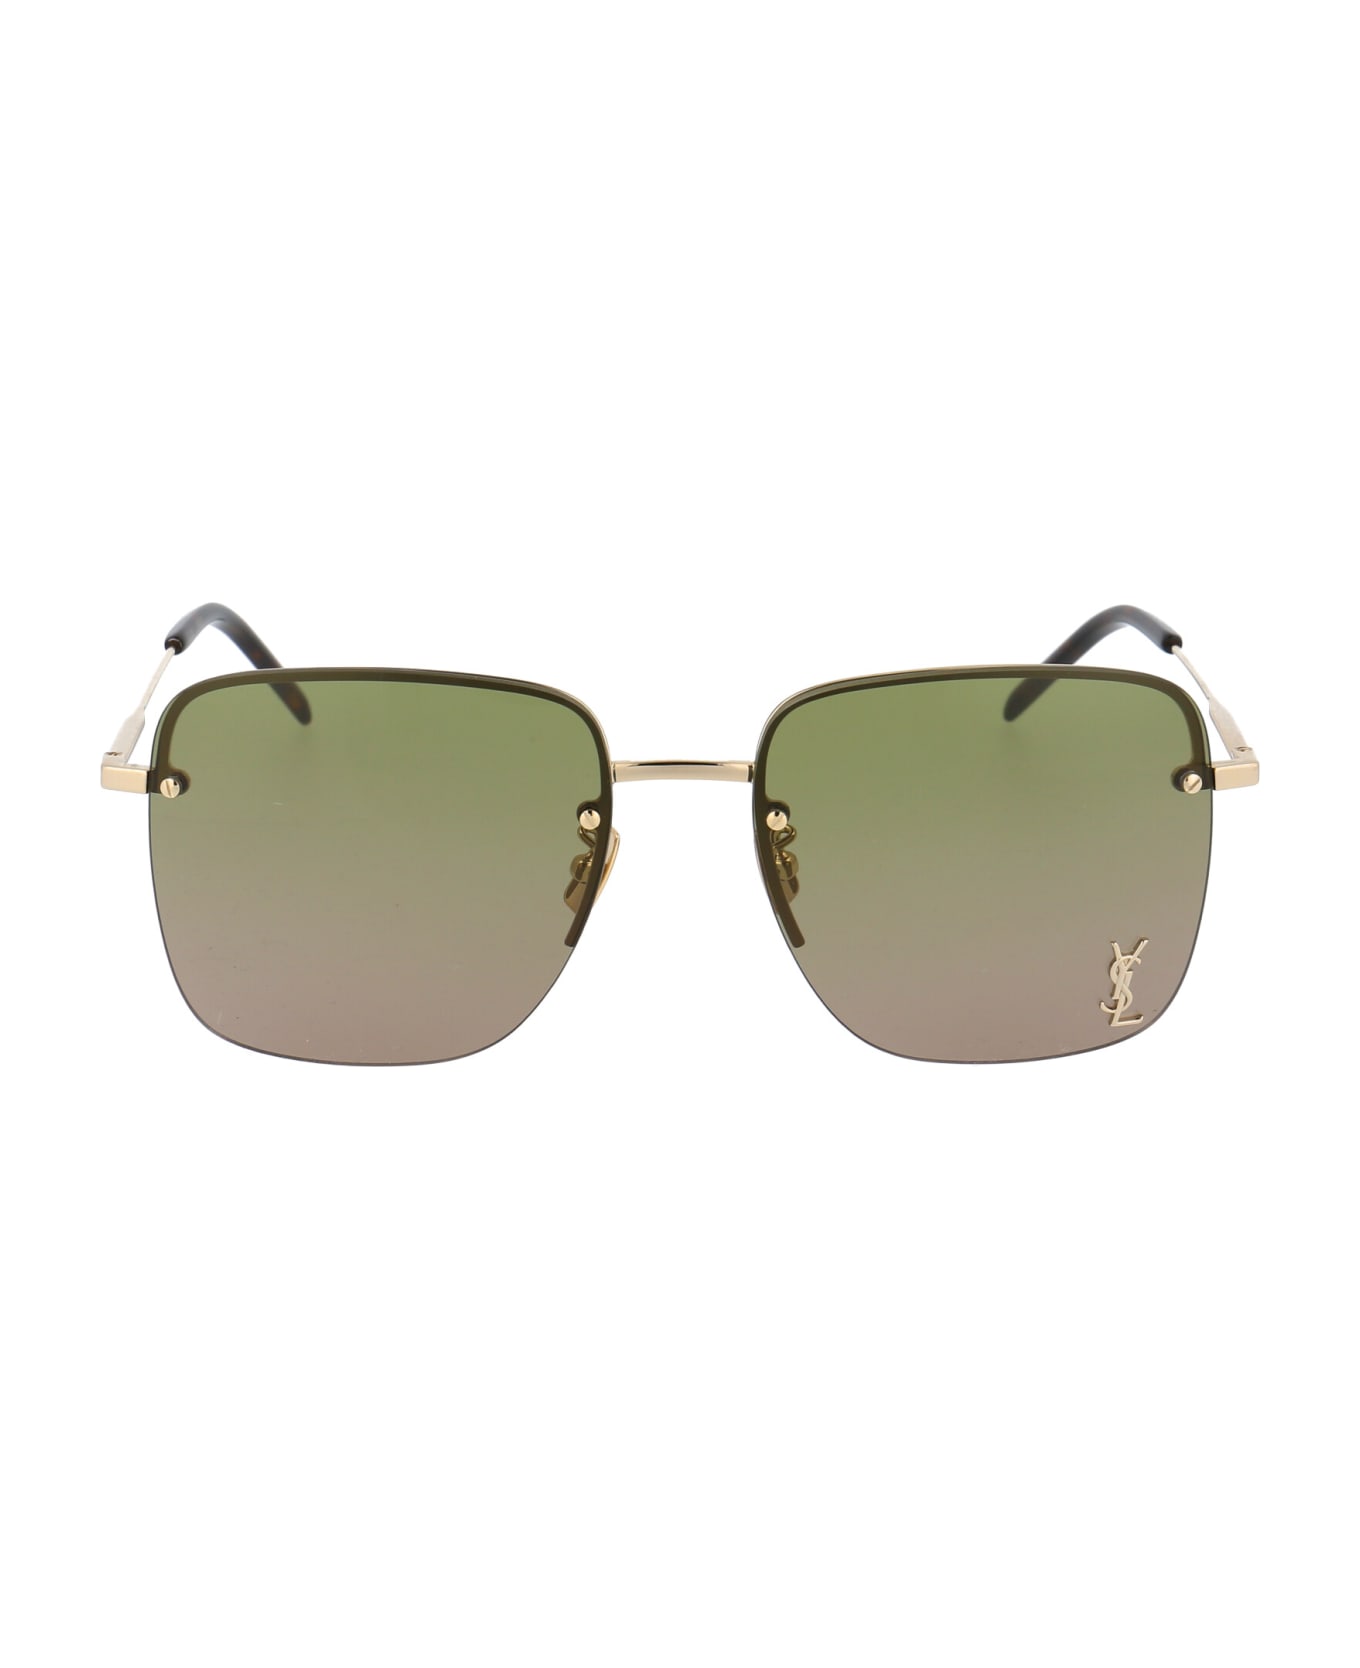 Saint Laurent Eyewear Sl 312 M Sunglasses - 003 GOLD GOLD GREEN サングラス